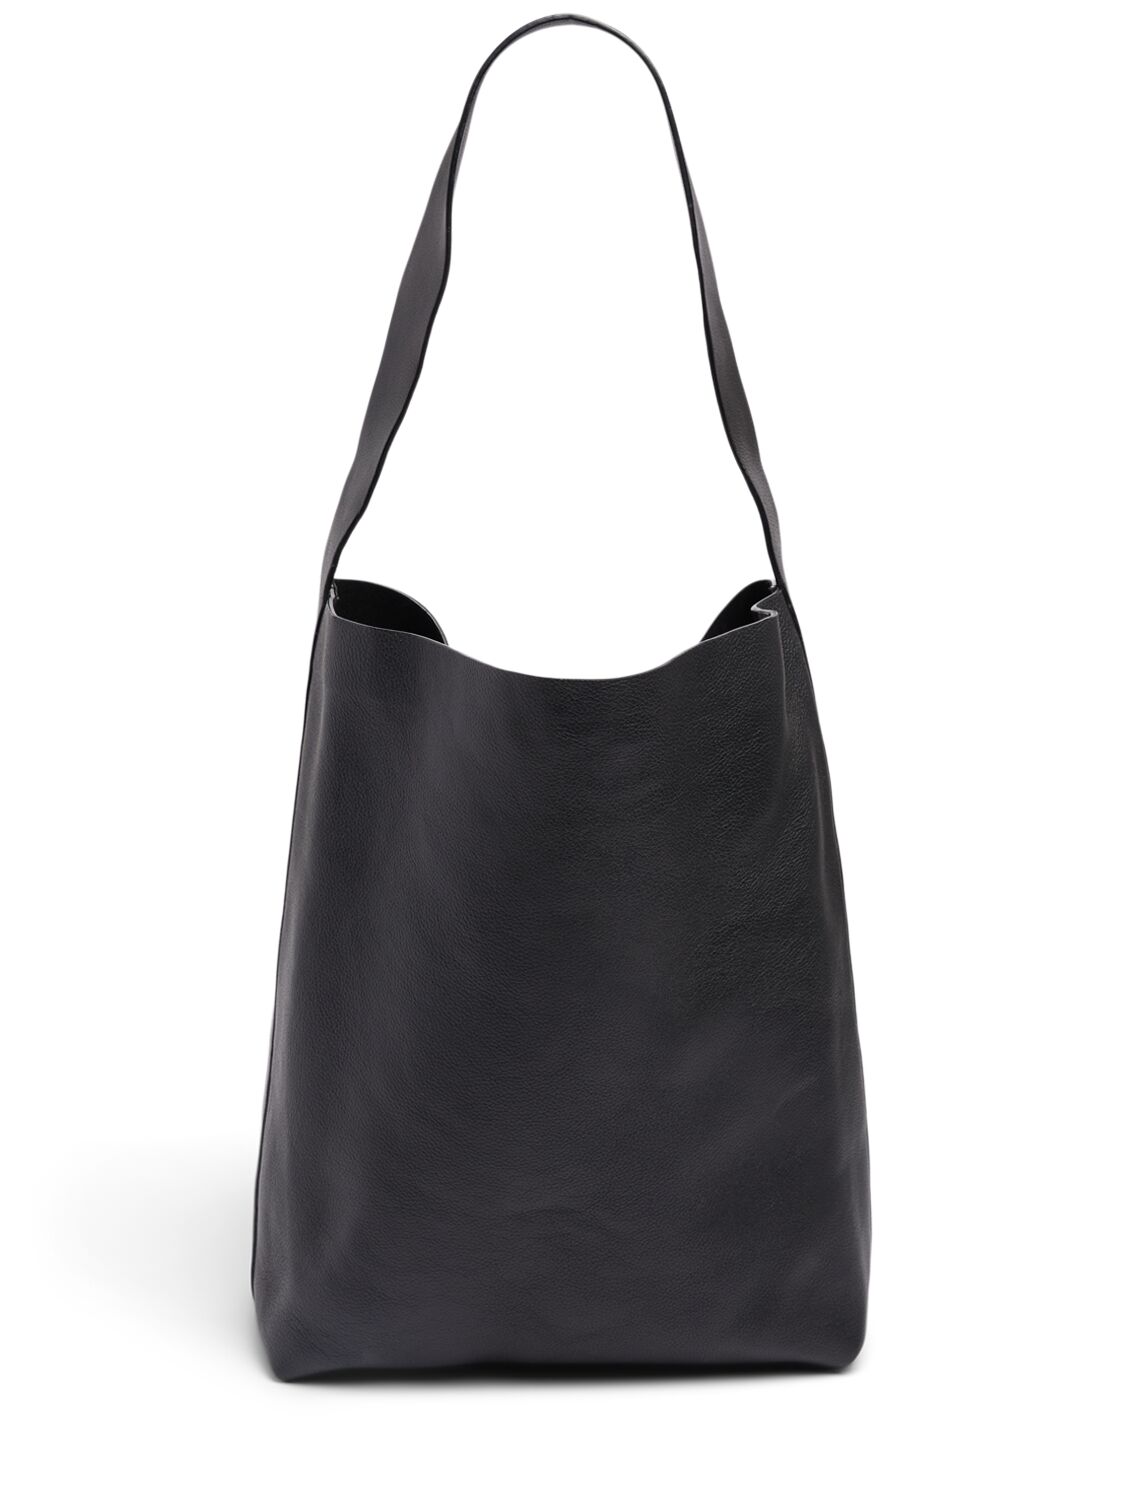 ST.AGNI Minimal Everyday Leather Tote Bag